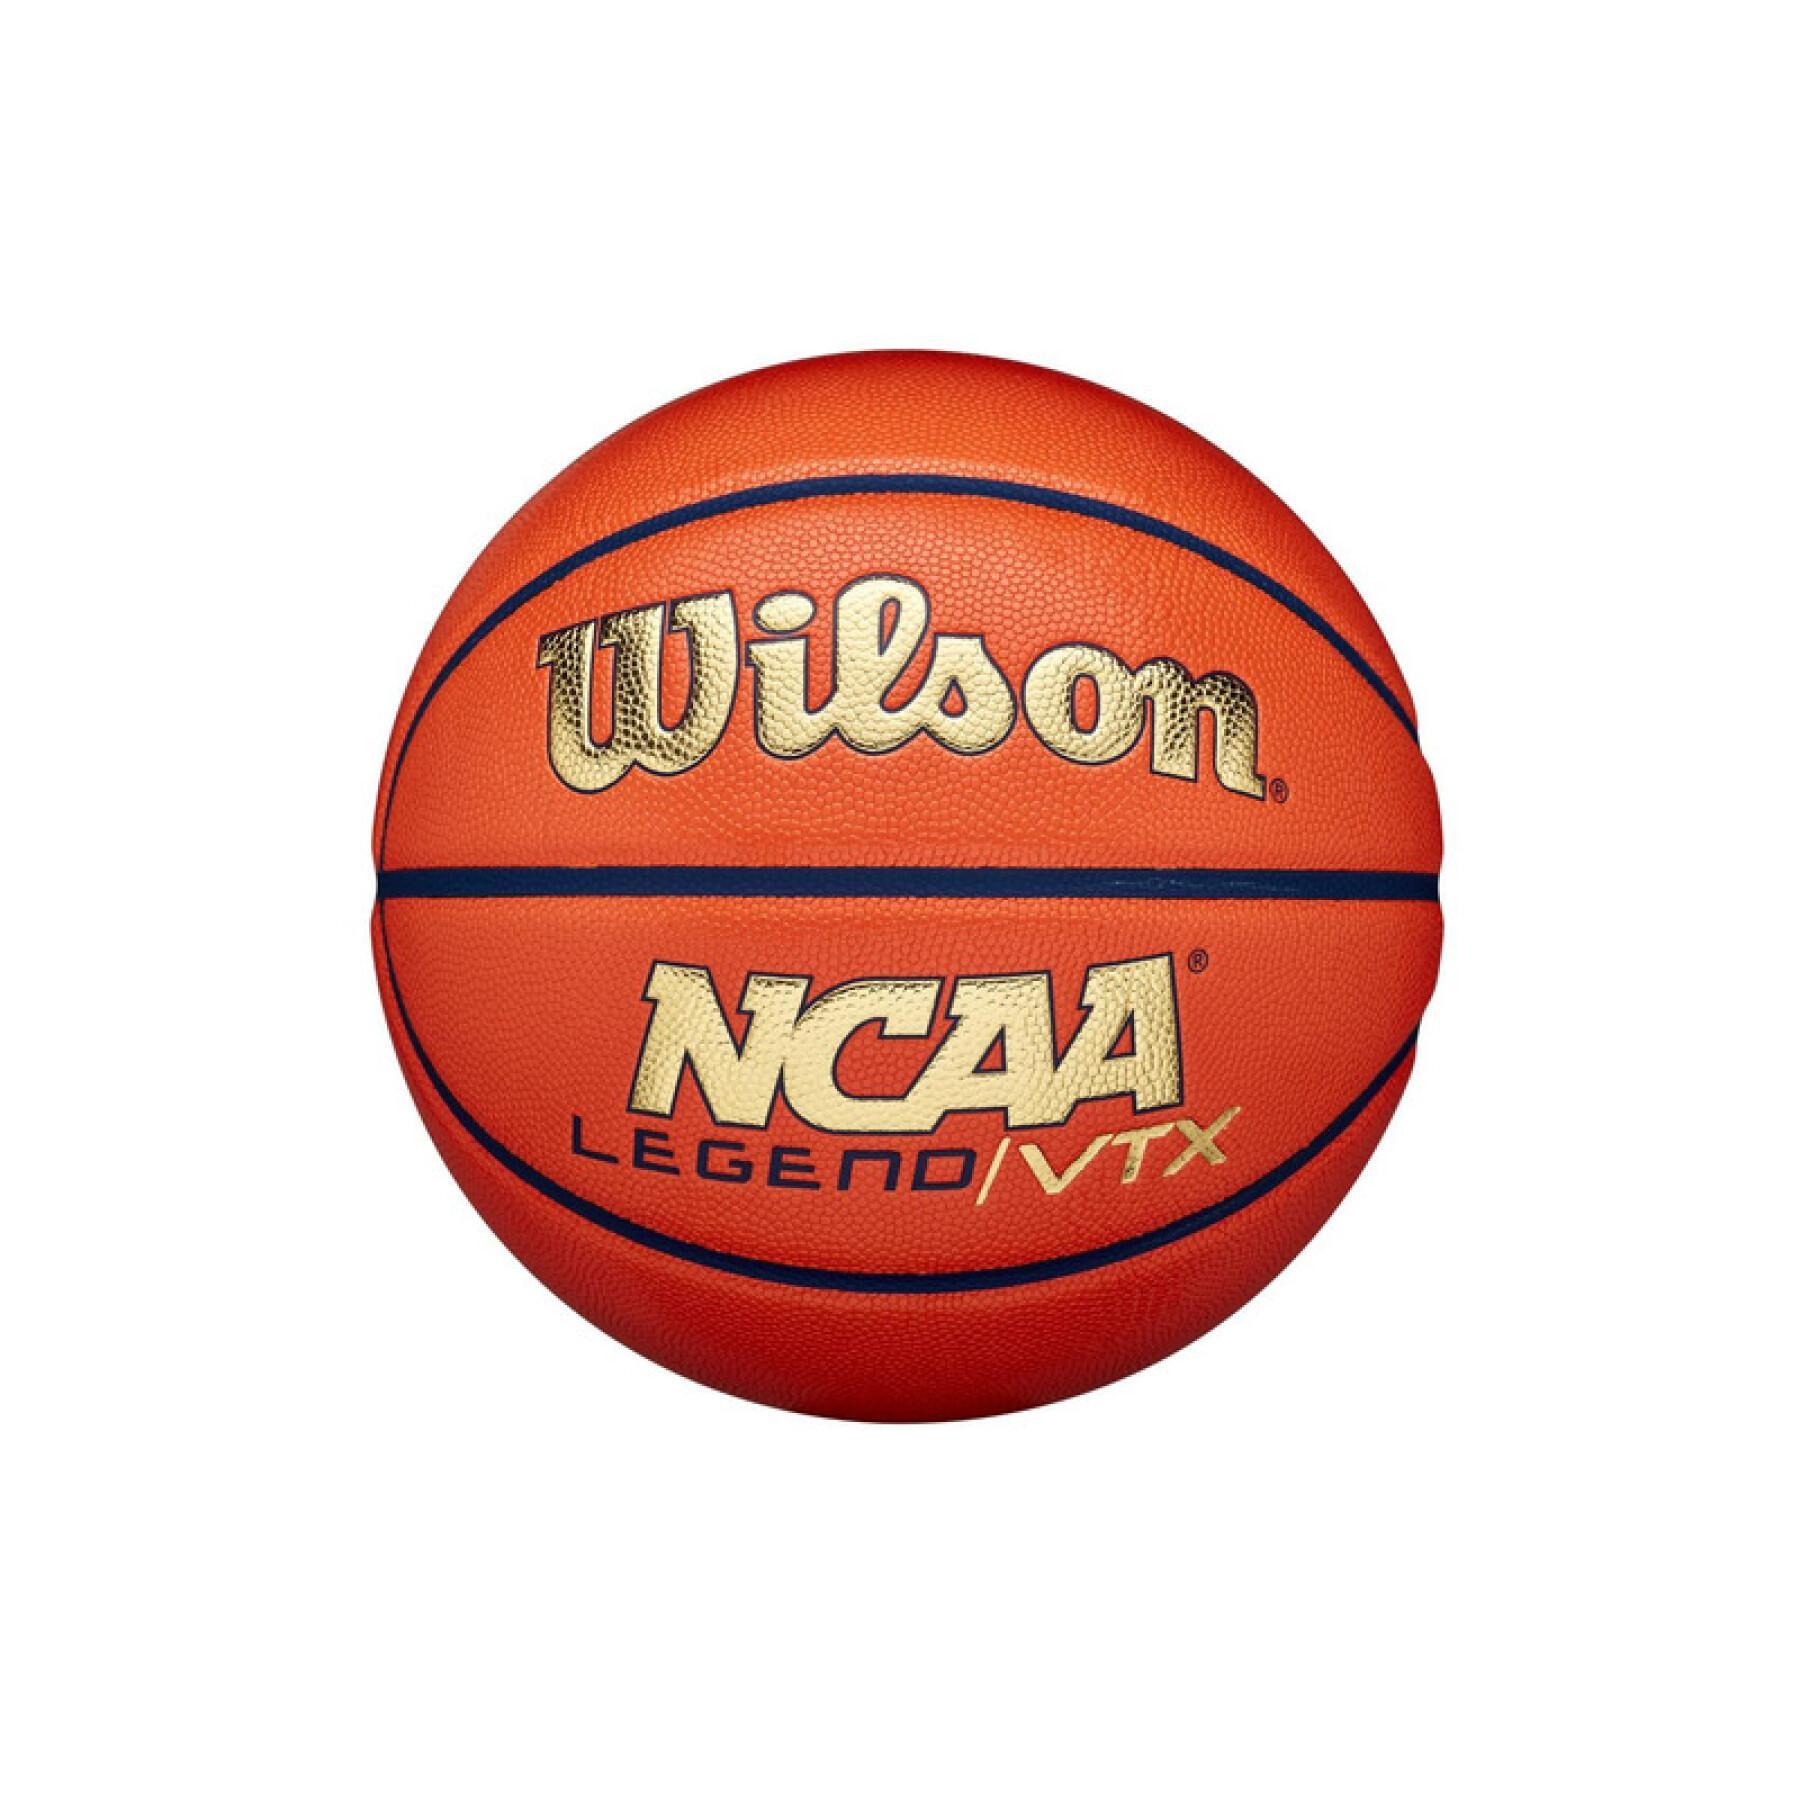 Ballong NCAA Legend Vtx